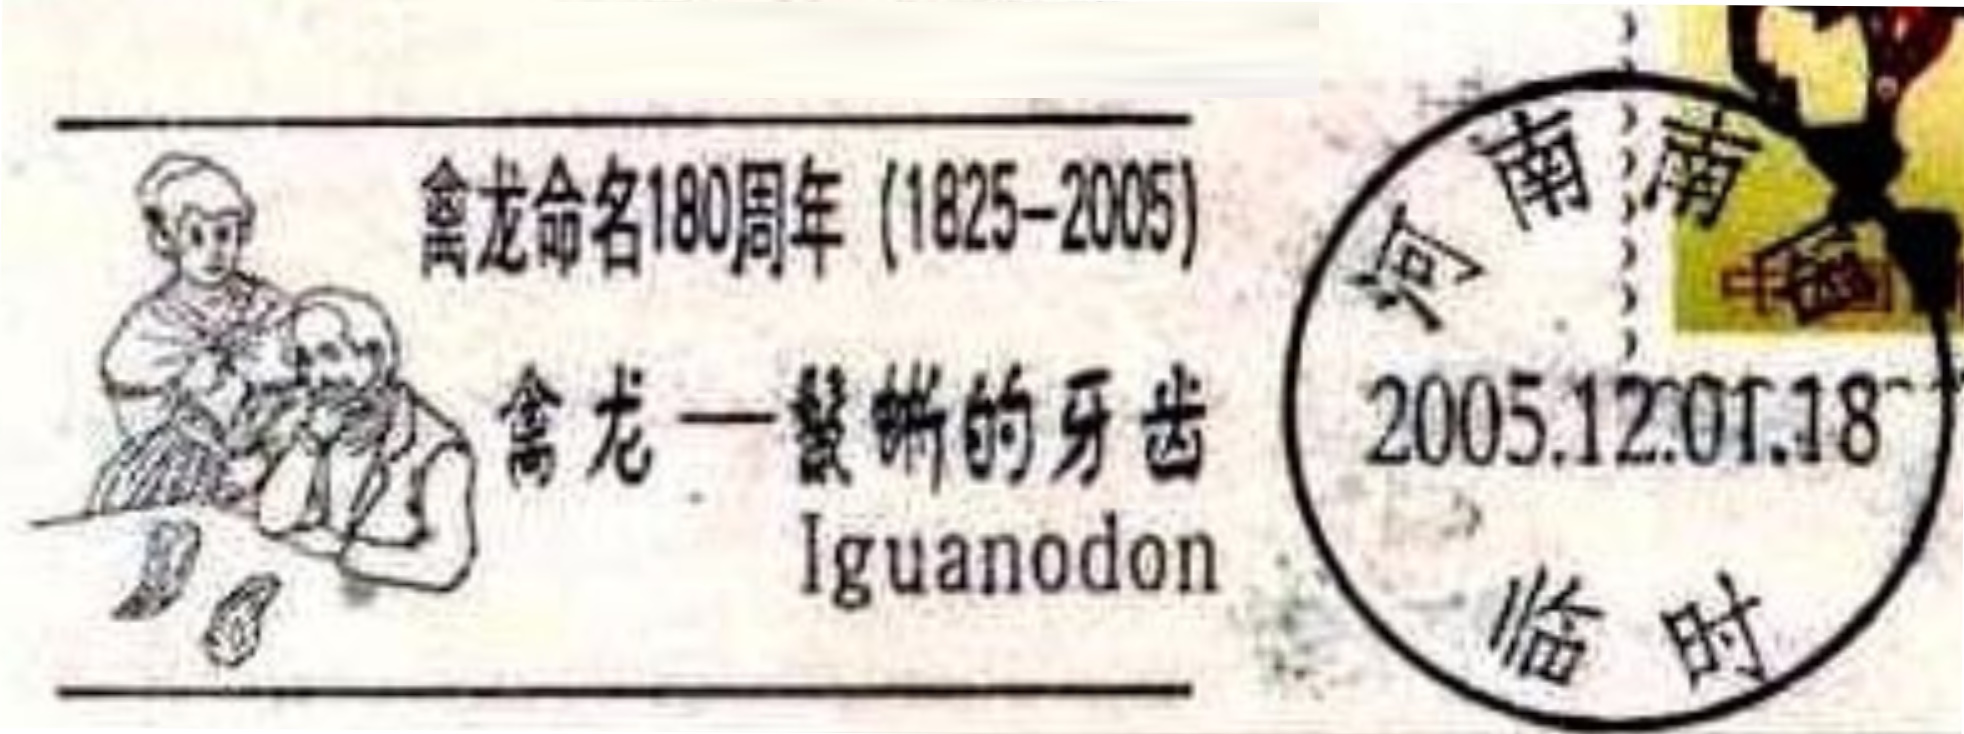 Gideon and Mary Ann Mantell studing Iguanodon teeth on postmark of China 2005